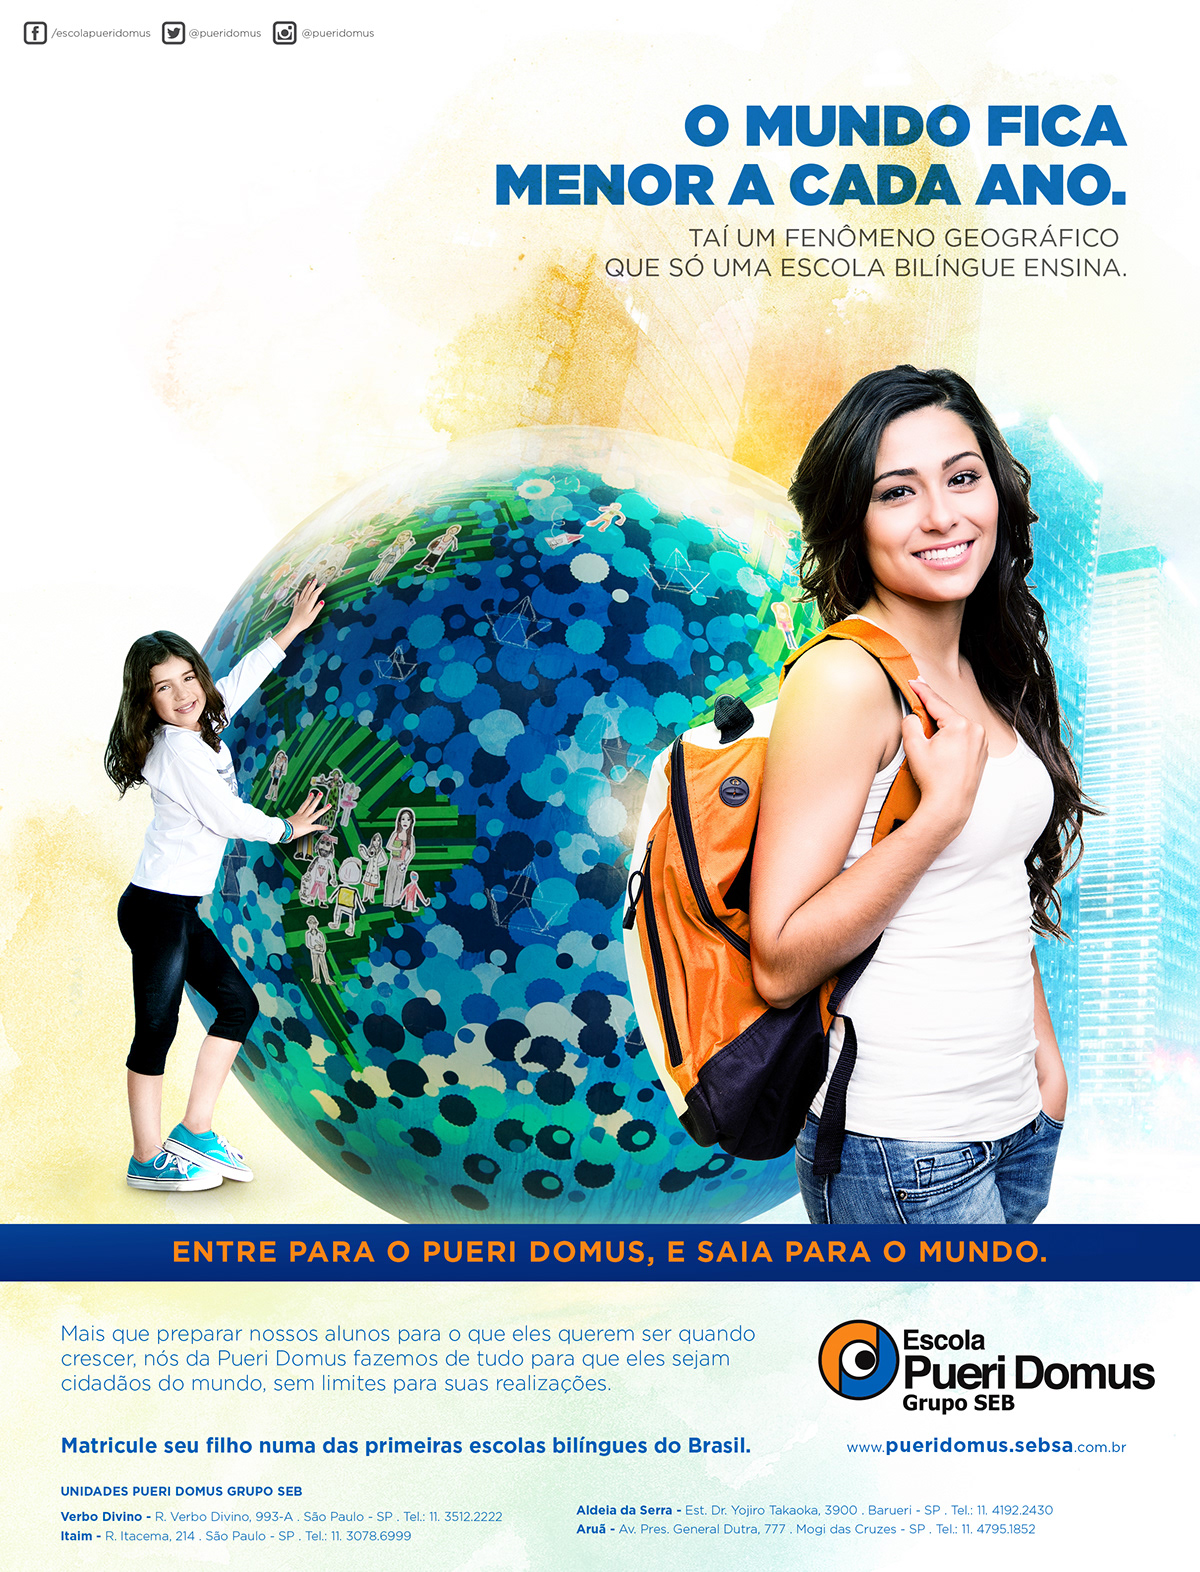 Colégio Campanha de matrícula Pueri Domus seb matrícula Job: Enrollment Campaign 2015 Client: Pueri Domus - Grupo SEB in partnership with PRAVY Digital agency